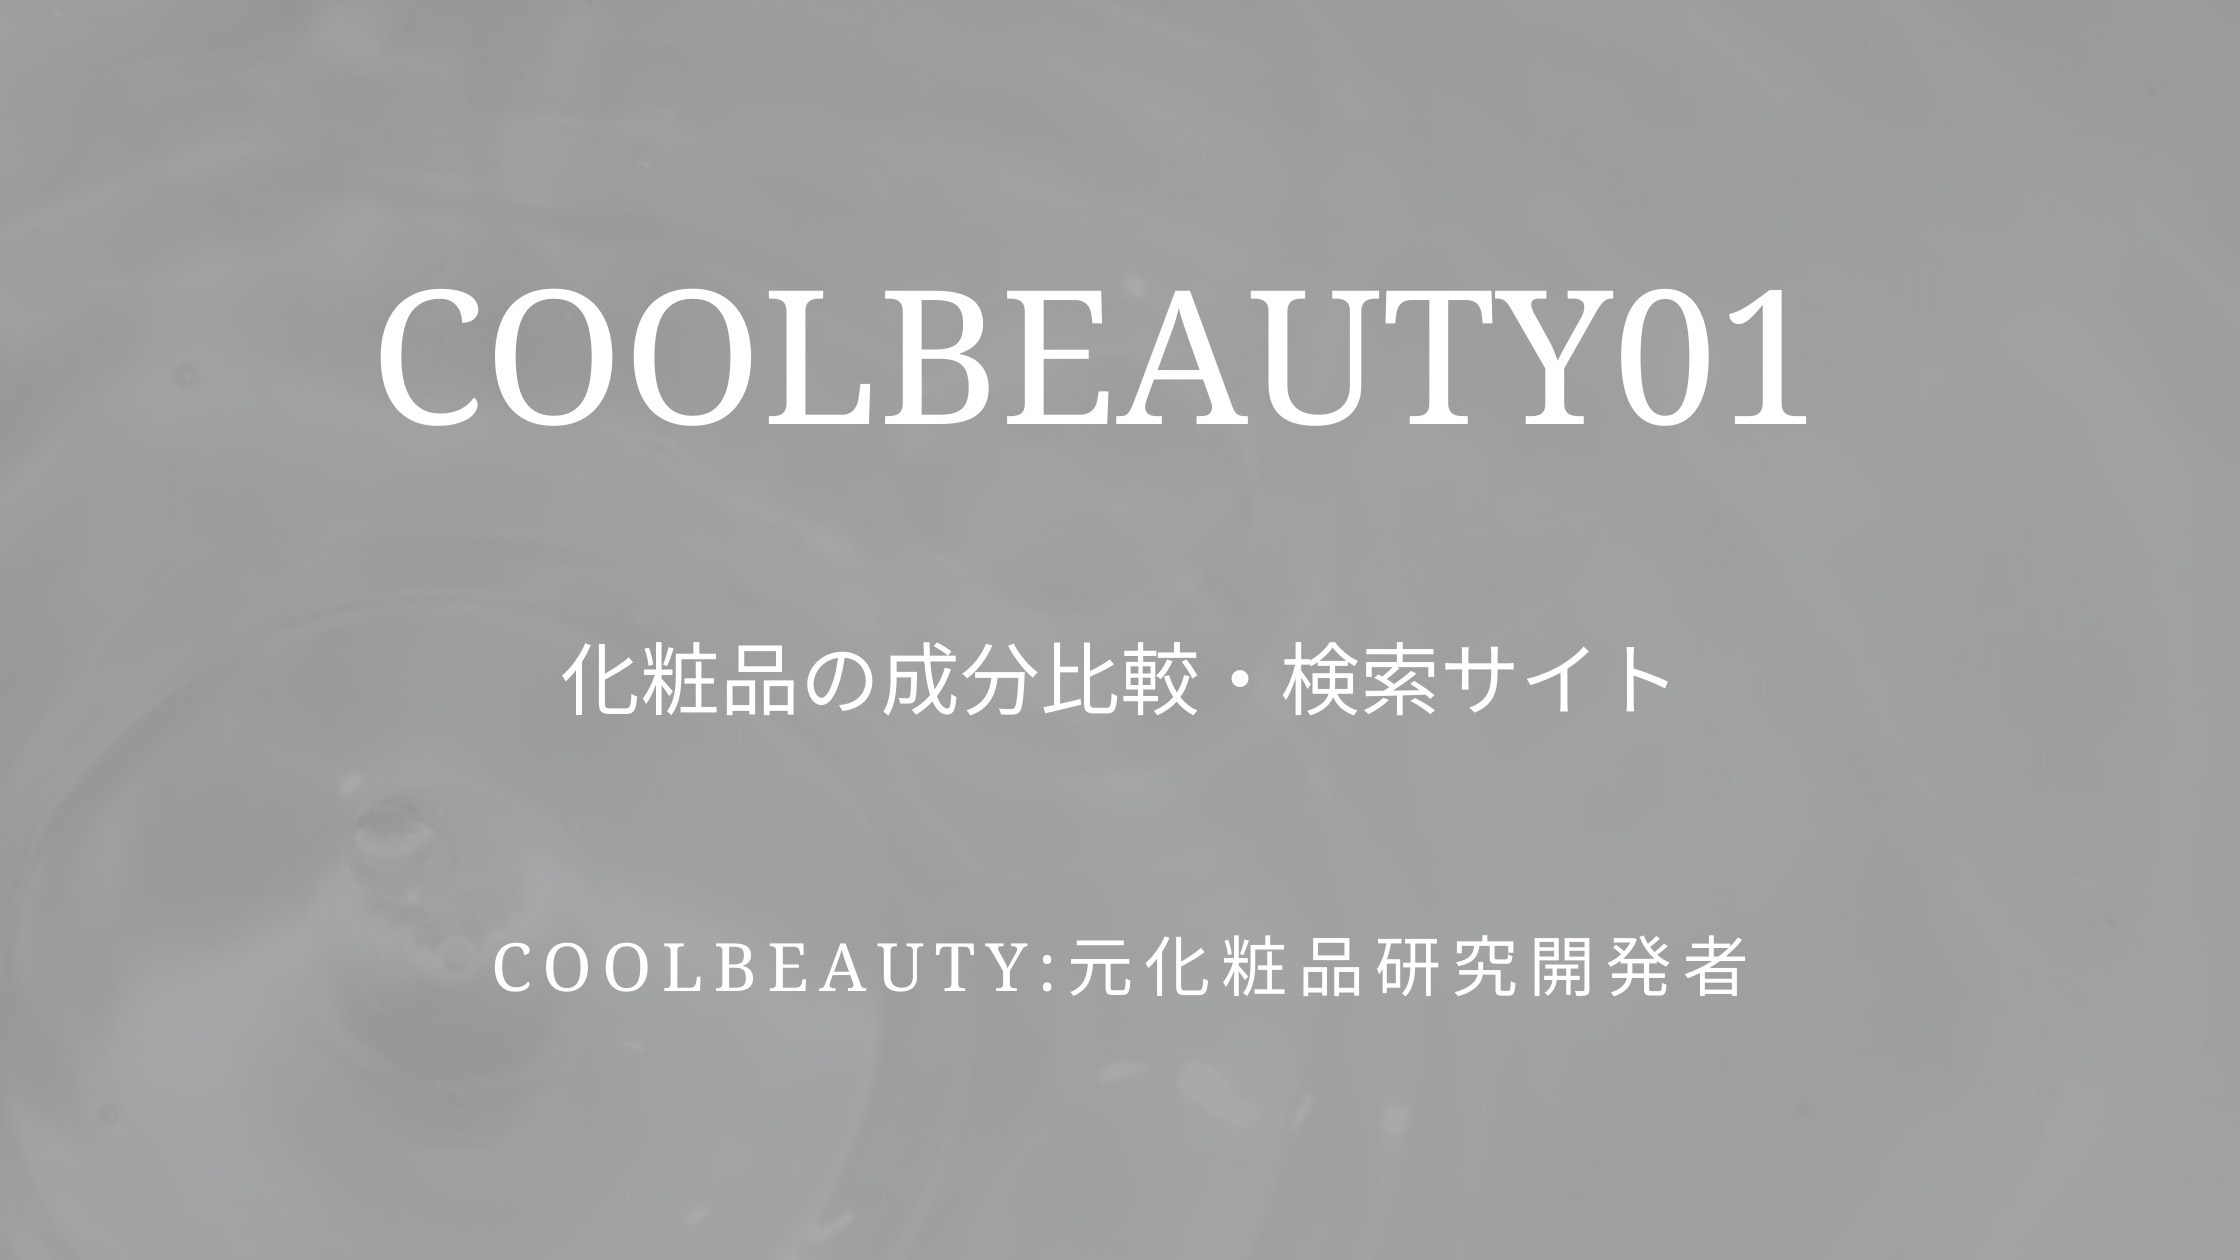 coolbeauty01|化粧品の成分比較・検索サイトについて